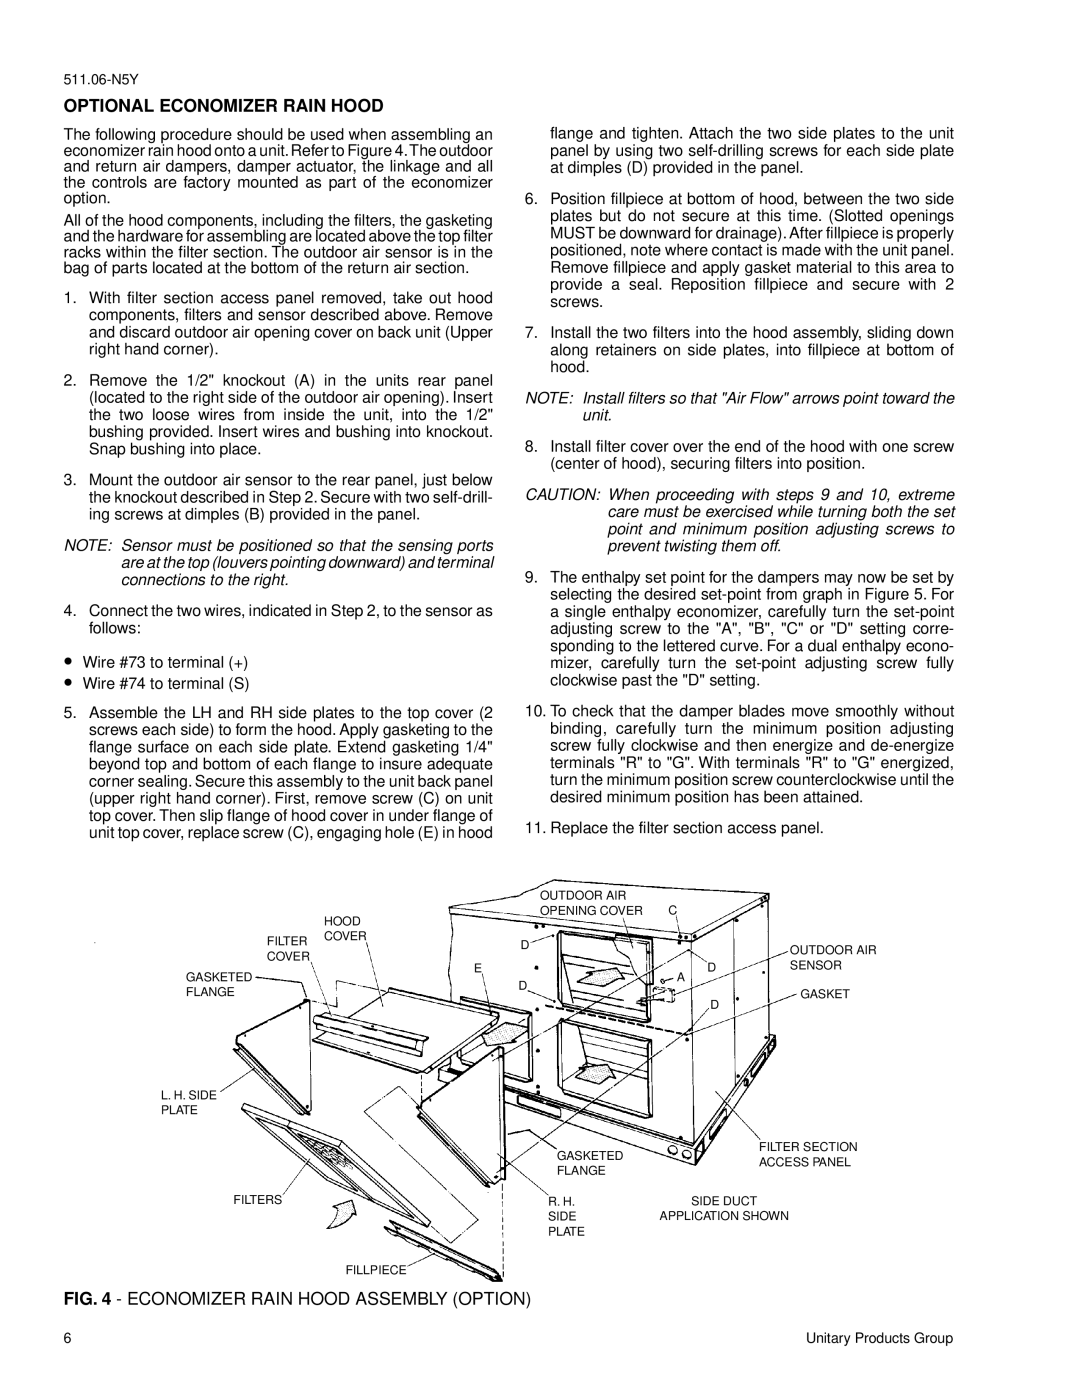 York 2000 installation instructions Optional Economizer Rain Hood, Economizer Rain Hood Assembly Option 